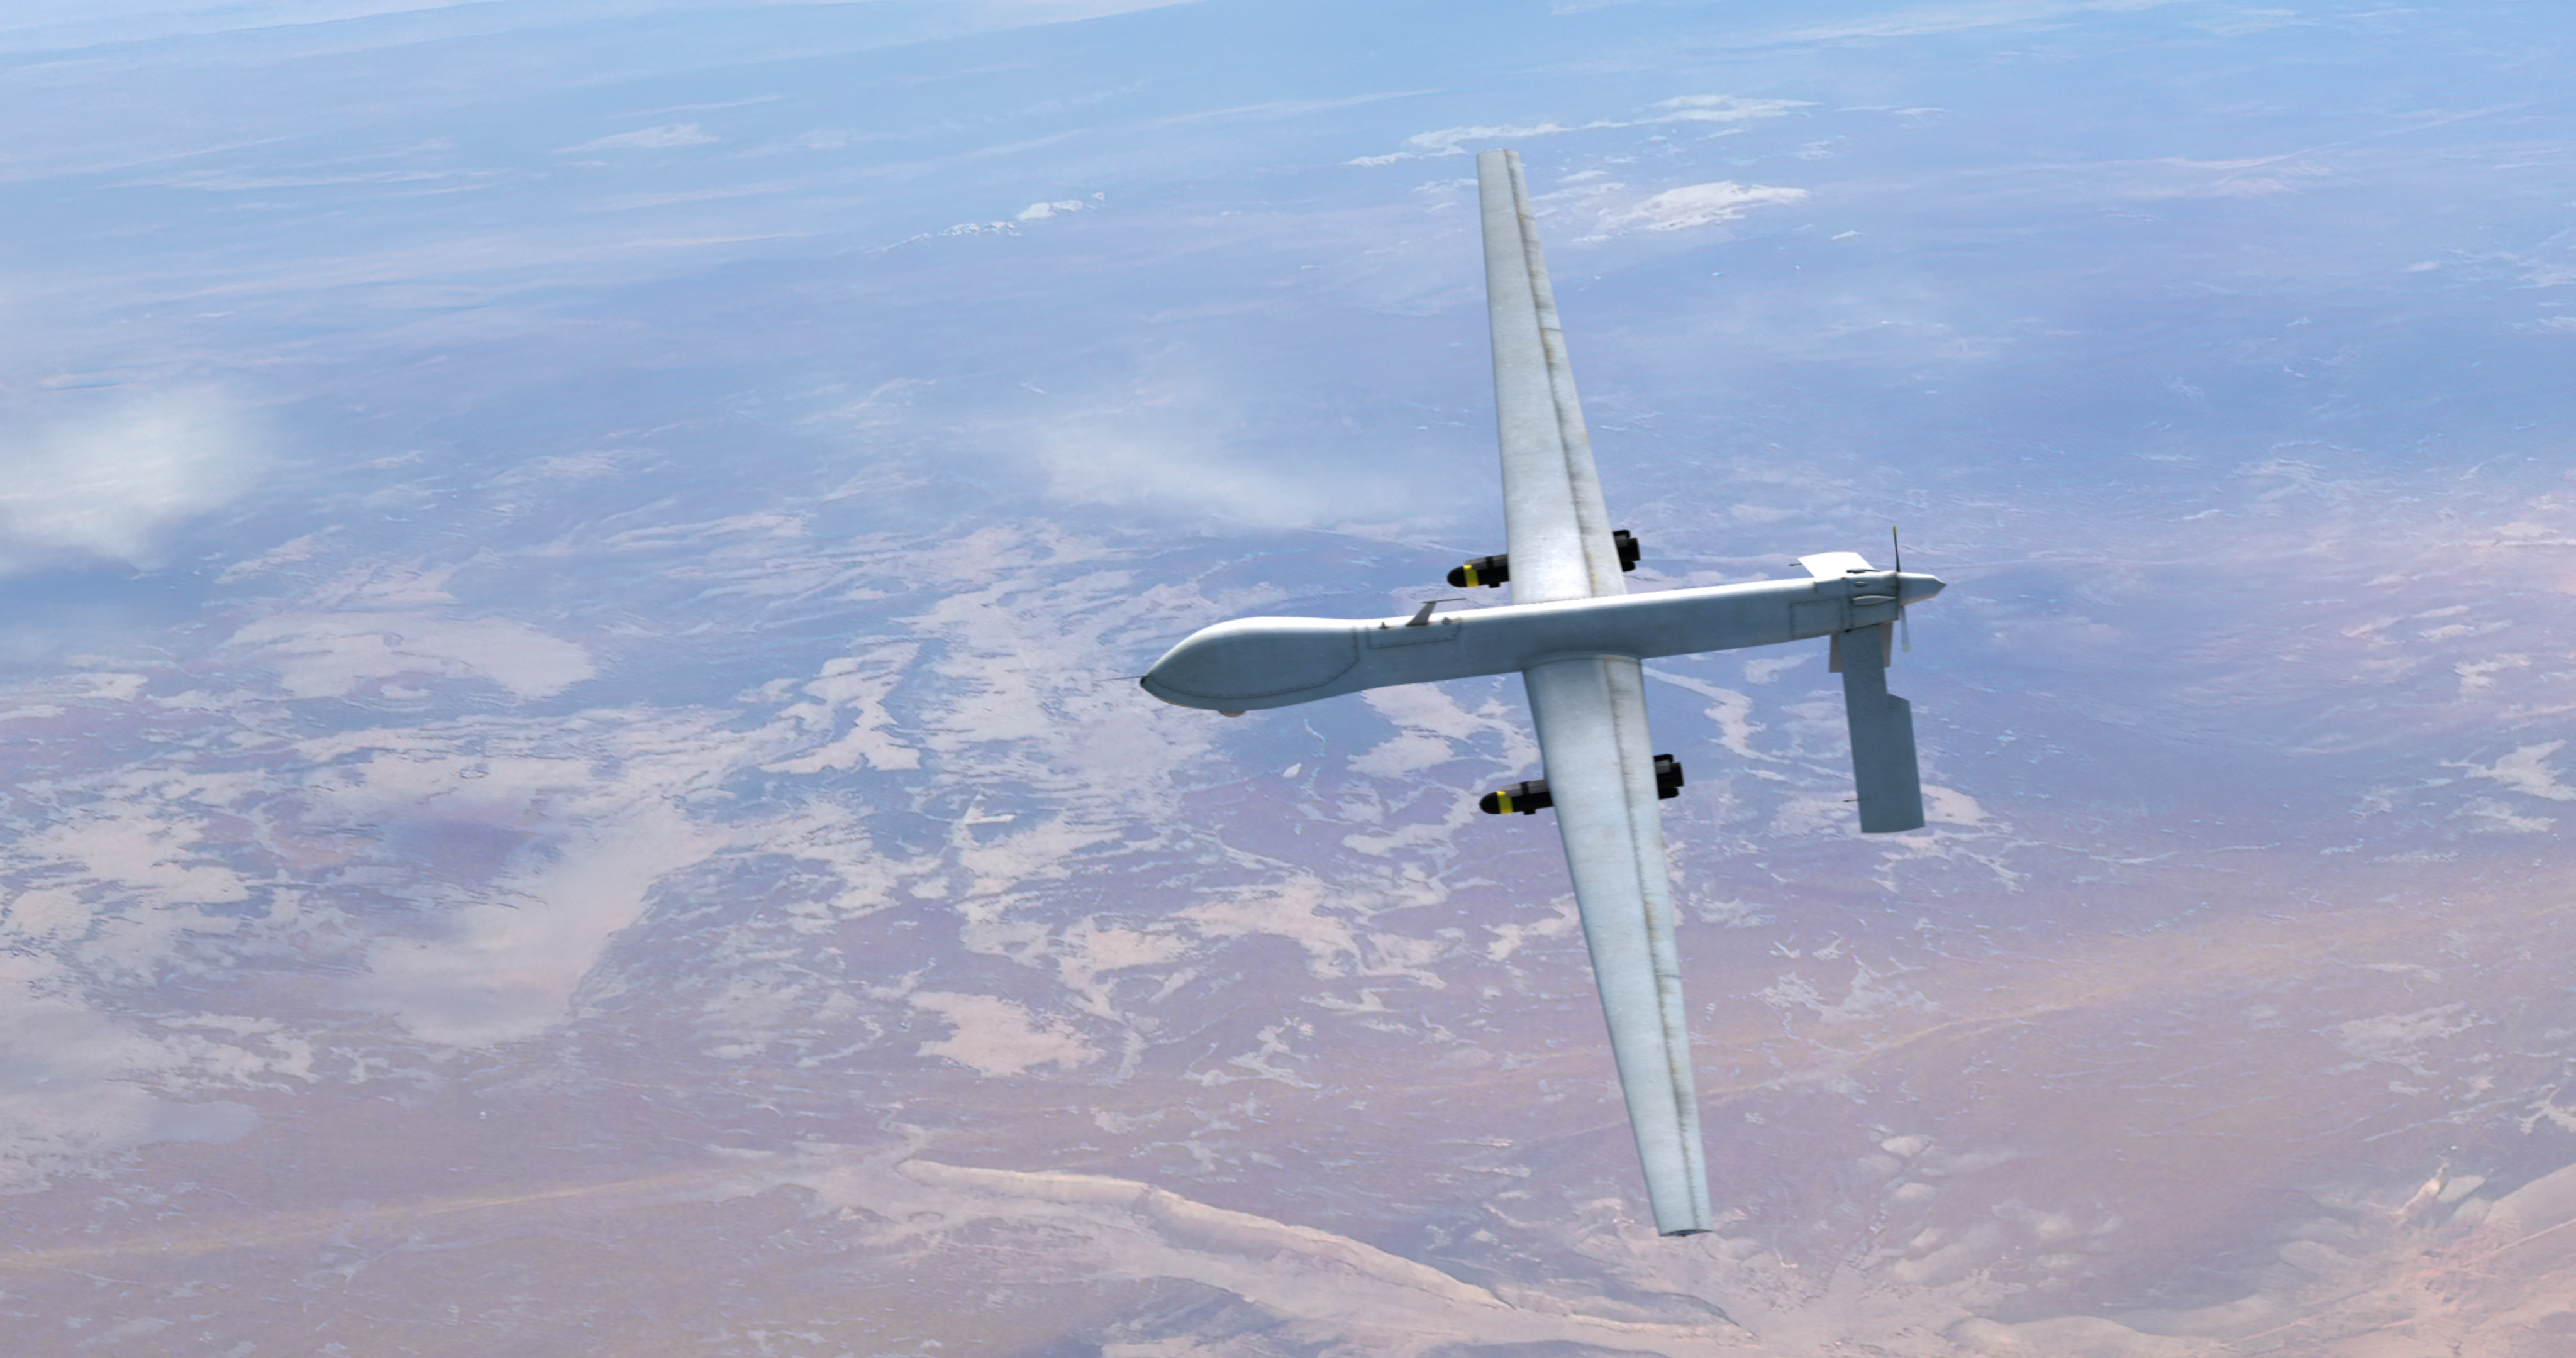 Flying defense technology over a desert landscape.